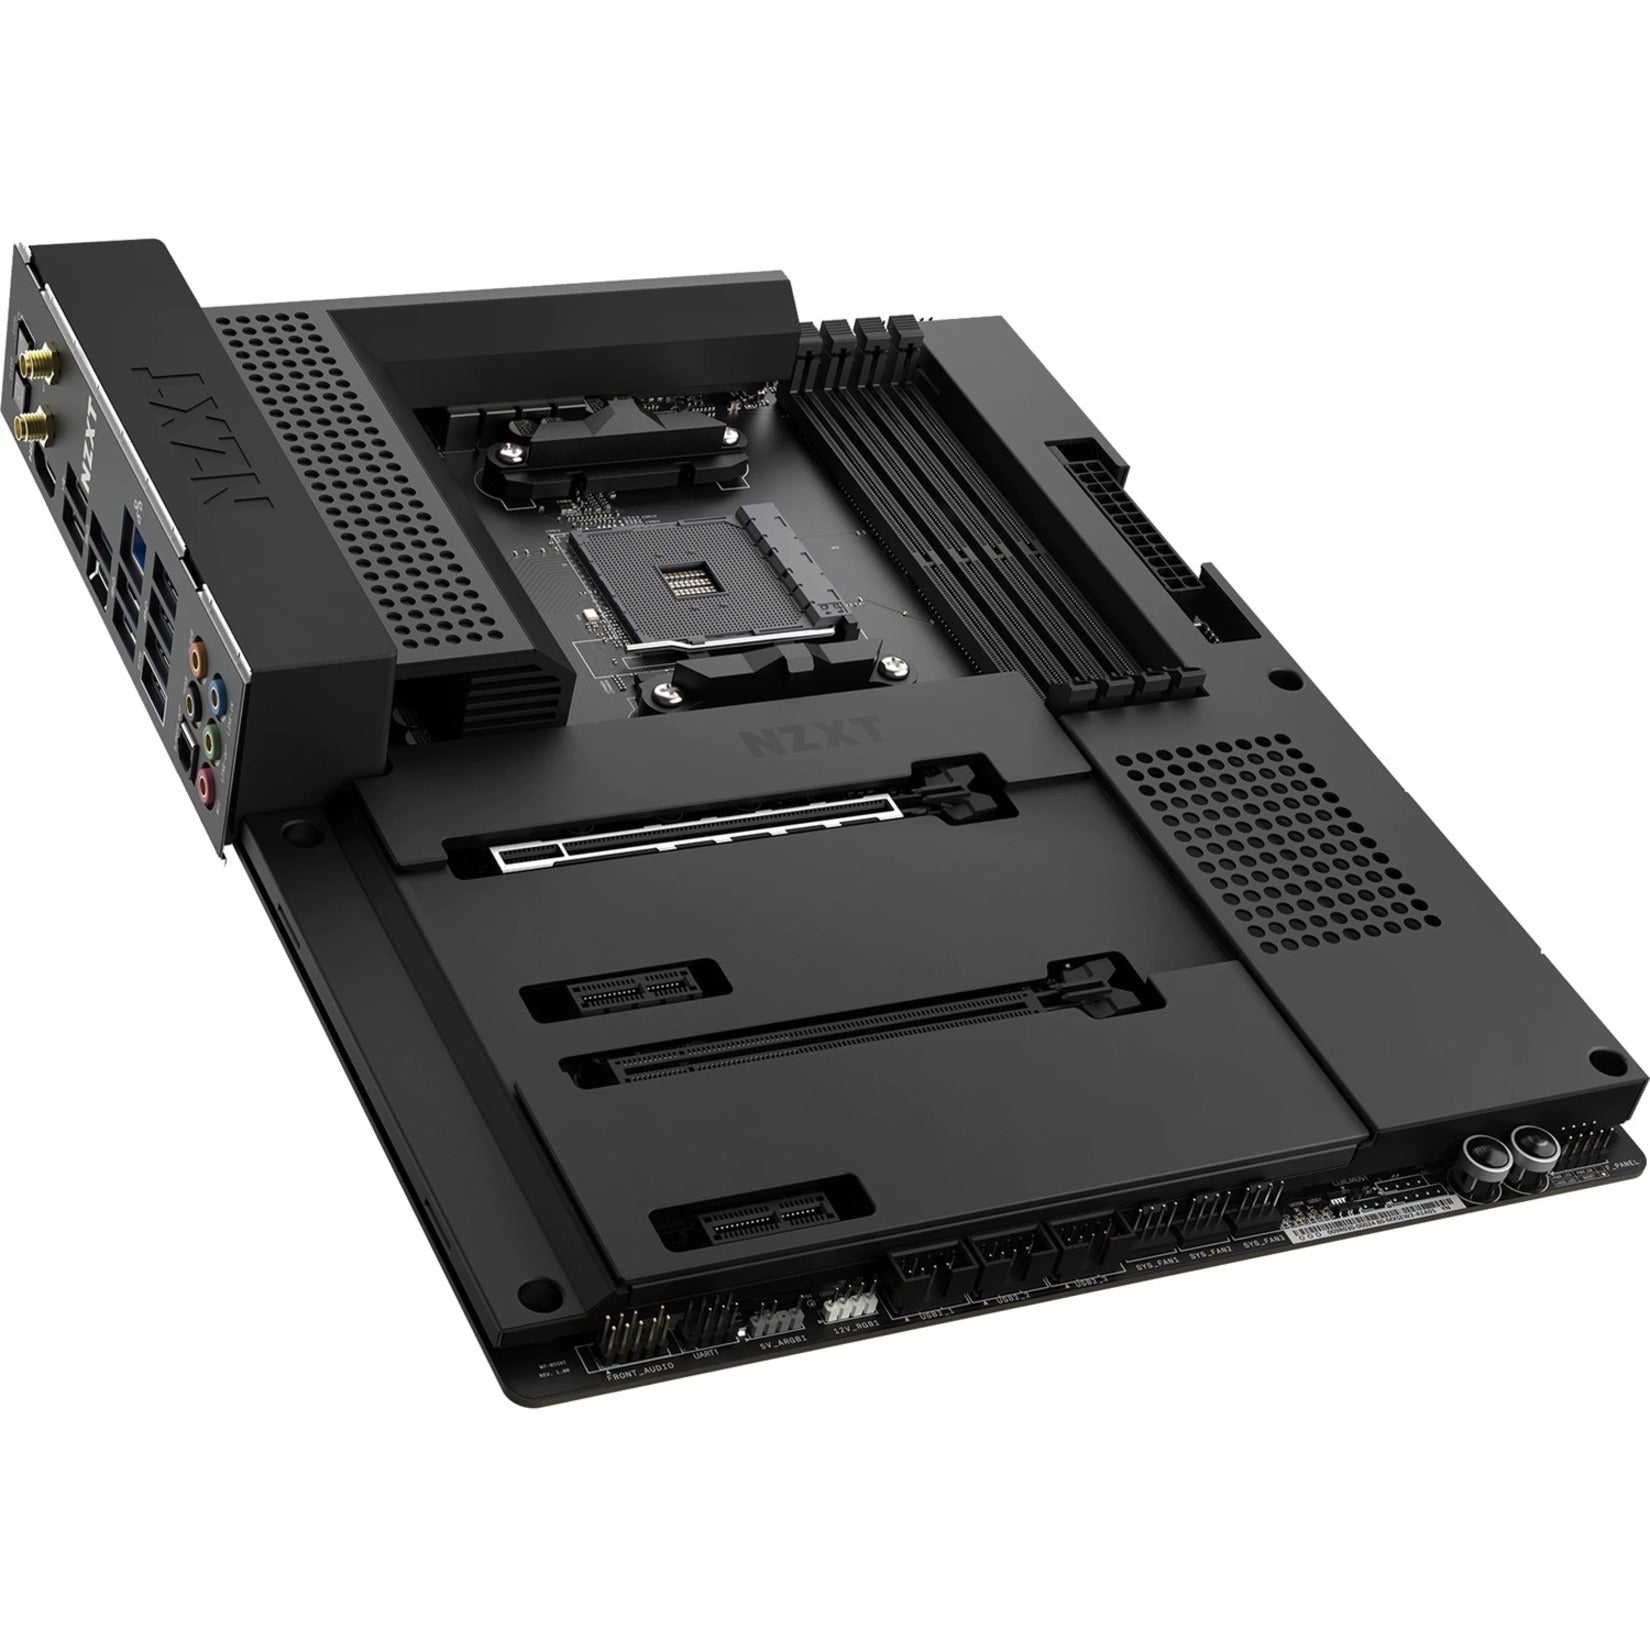 NZXT N7-B55XT-B1 N7 B550 Gaming Desktop Motherboard, AMD B550 Chipset, Socket AM4, ATX